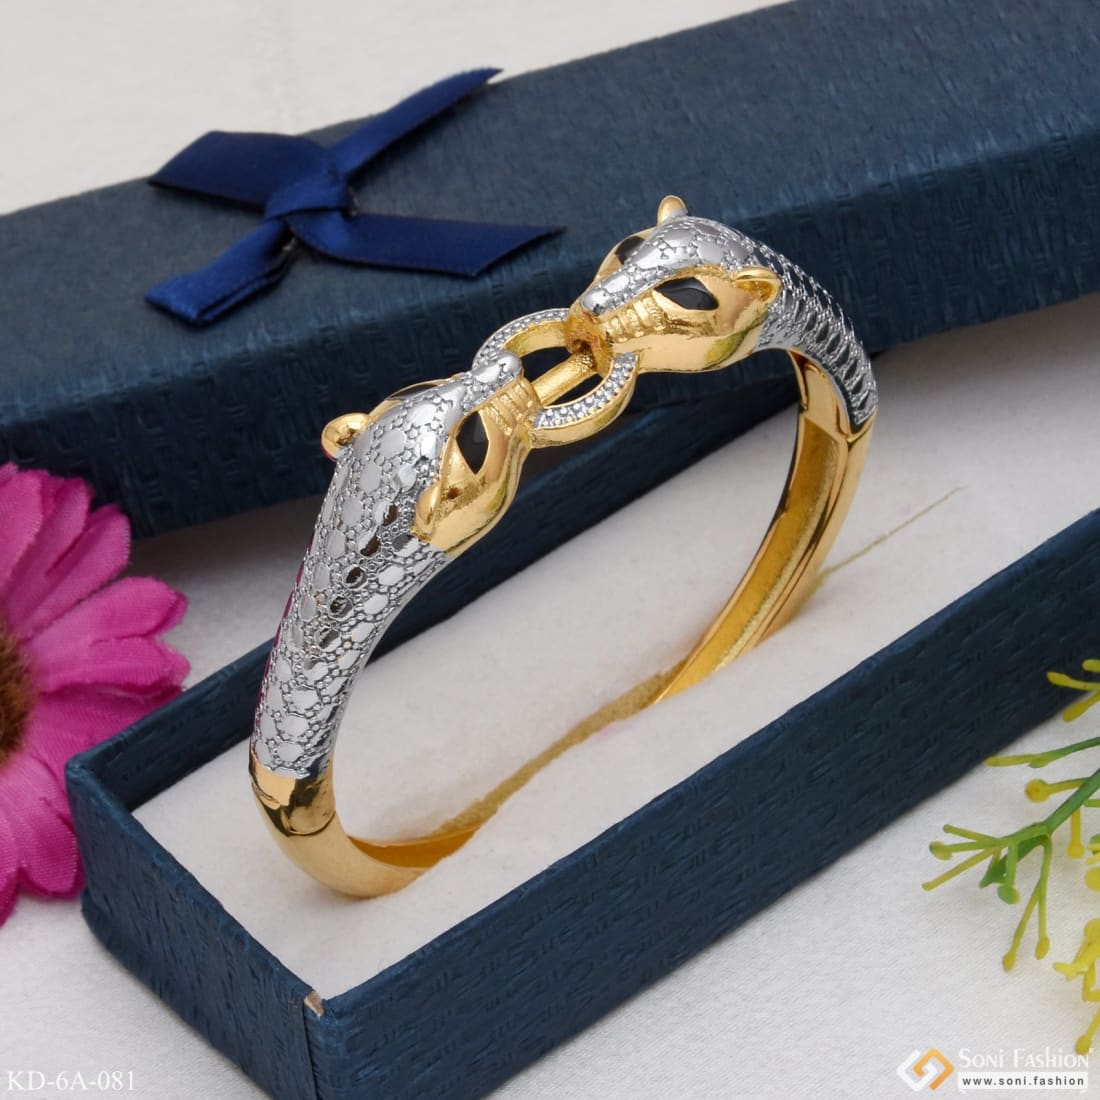 Jaguar silver & leather bracelet – mr. blackbird